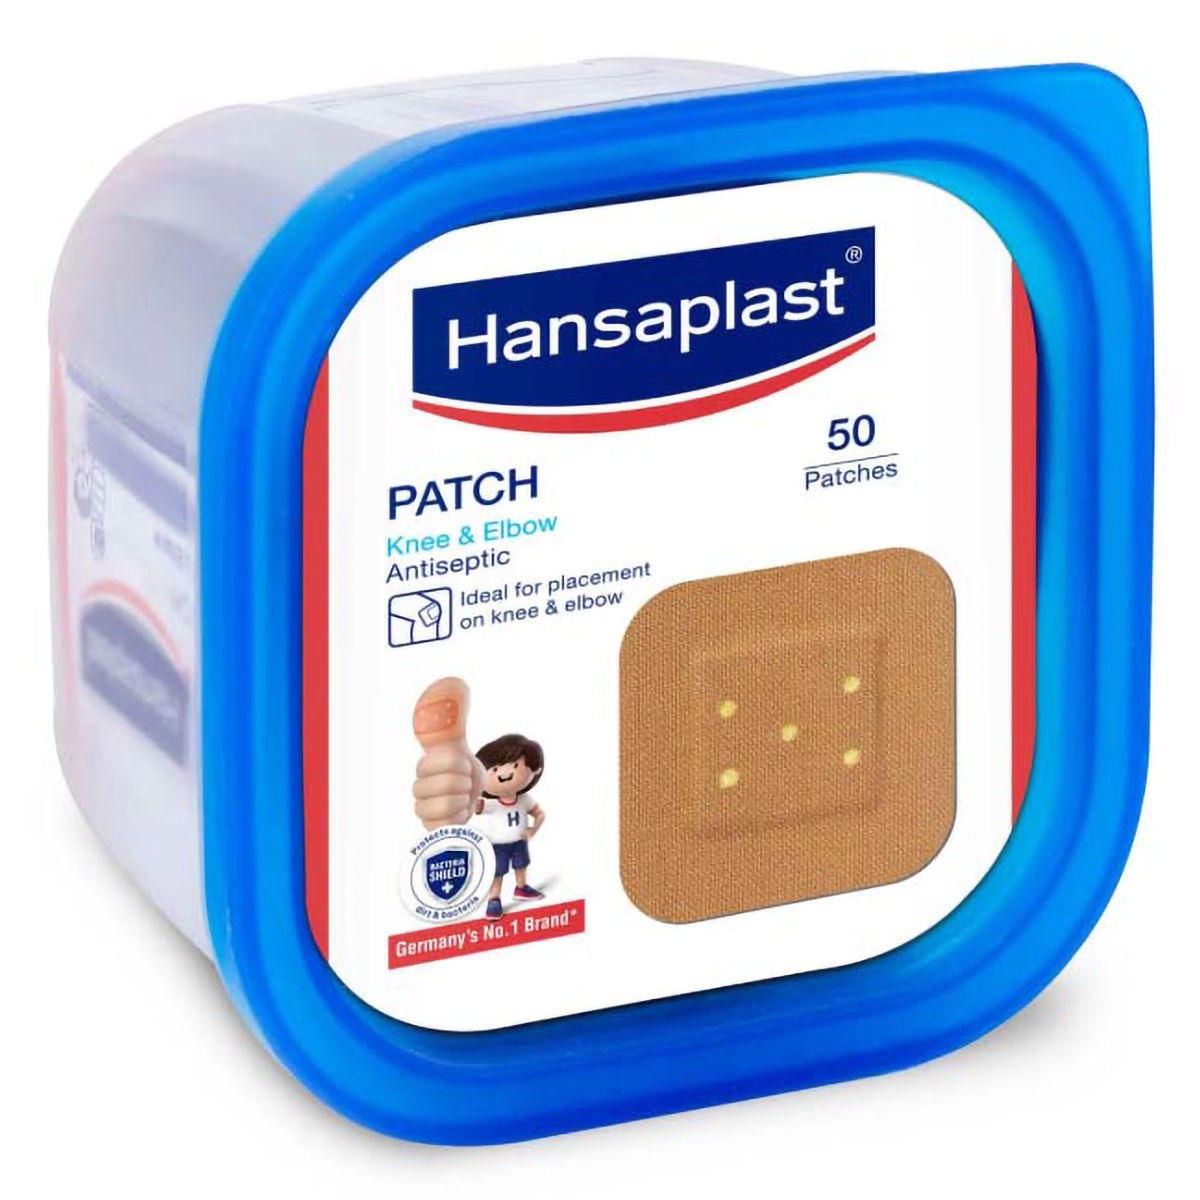 Buy Hansaplast Knee & Elbow Patches, 50 Count Online